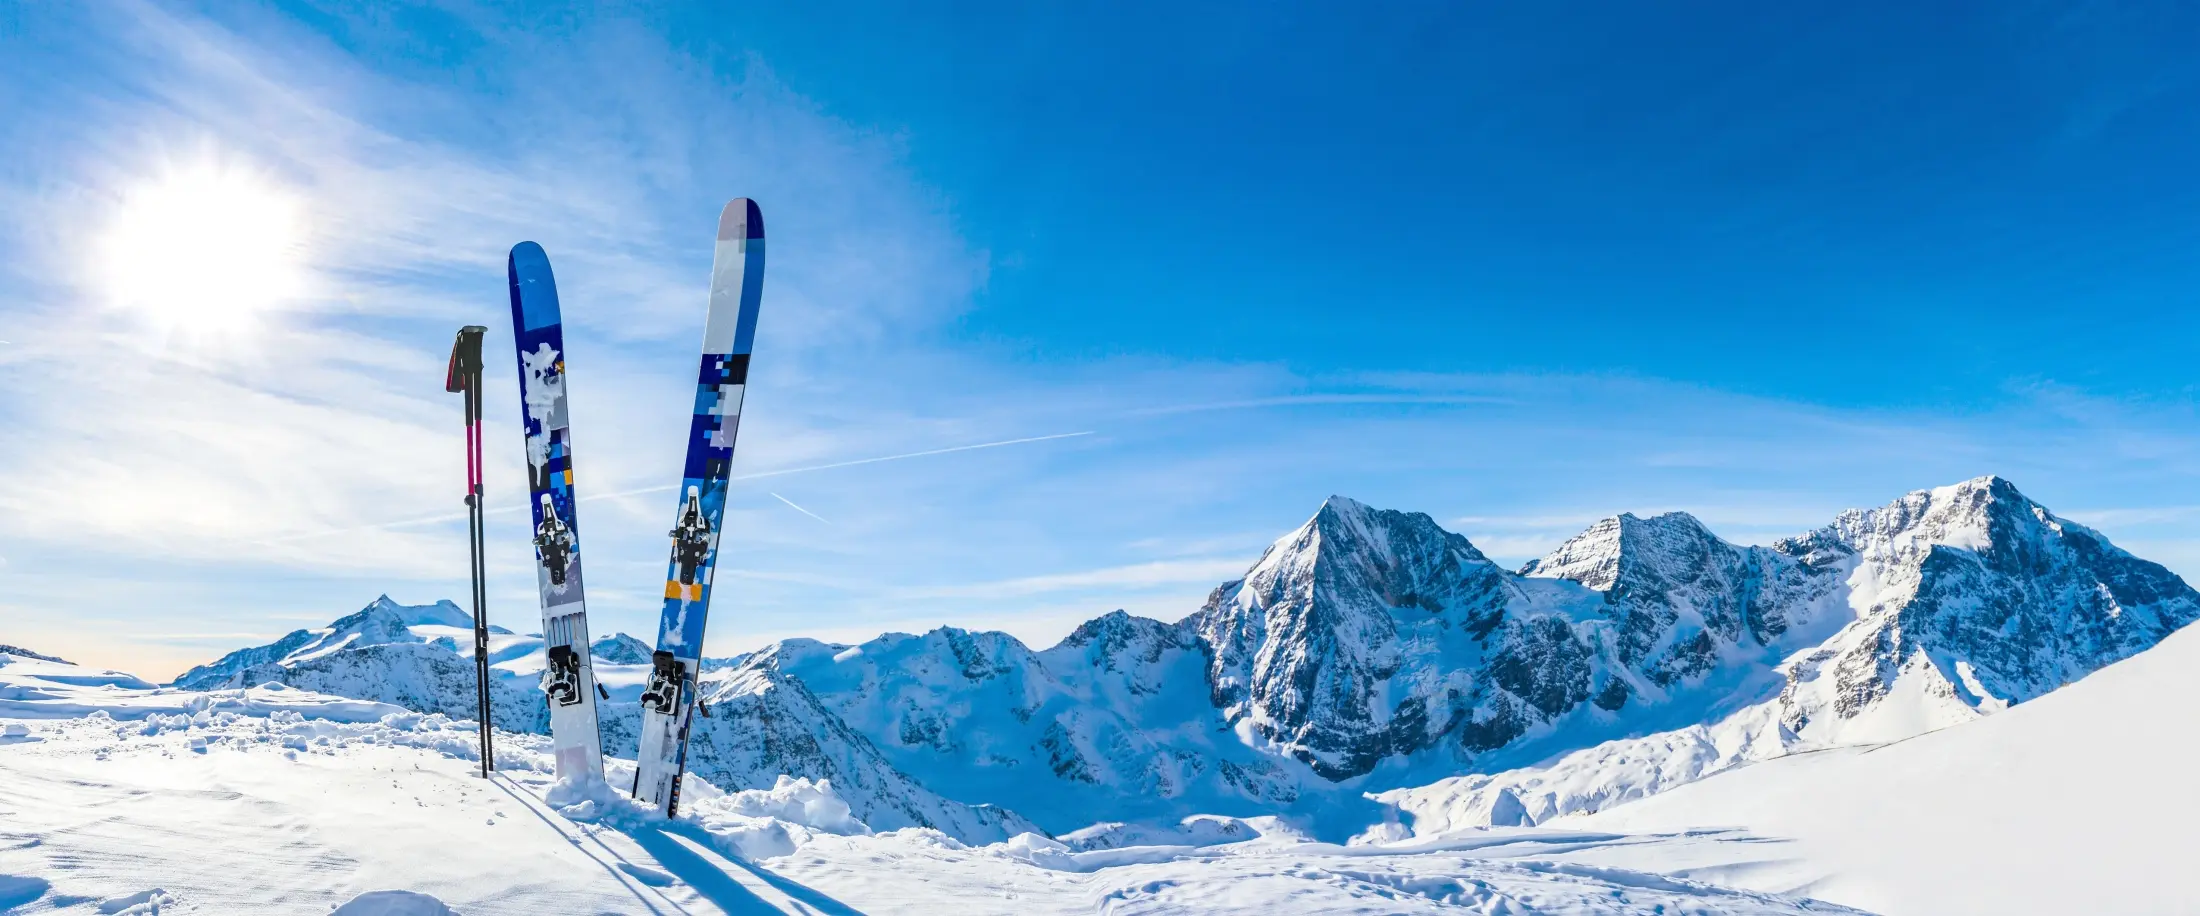 Apres ski/Winterdecoratie - 